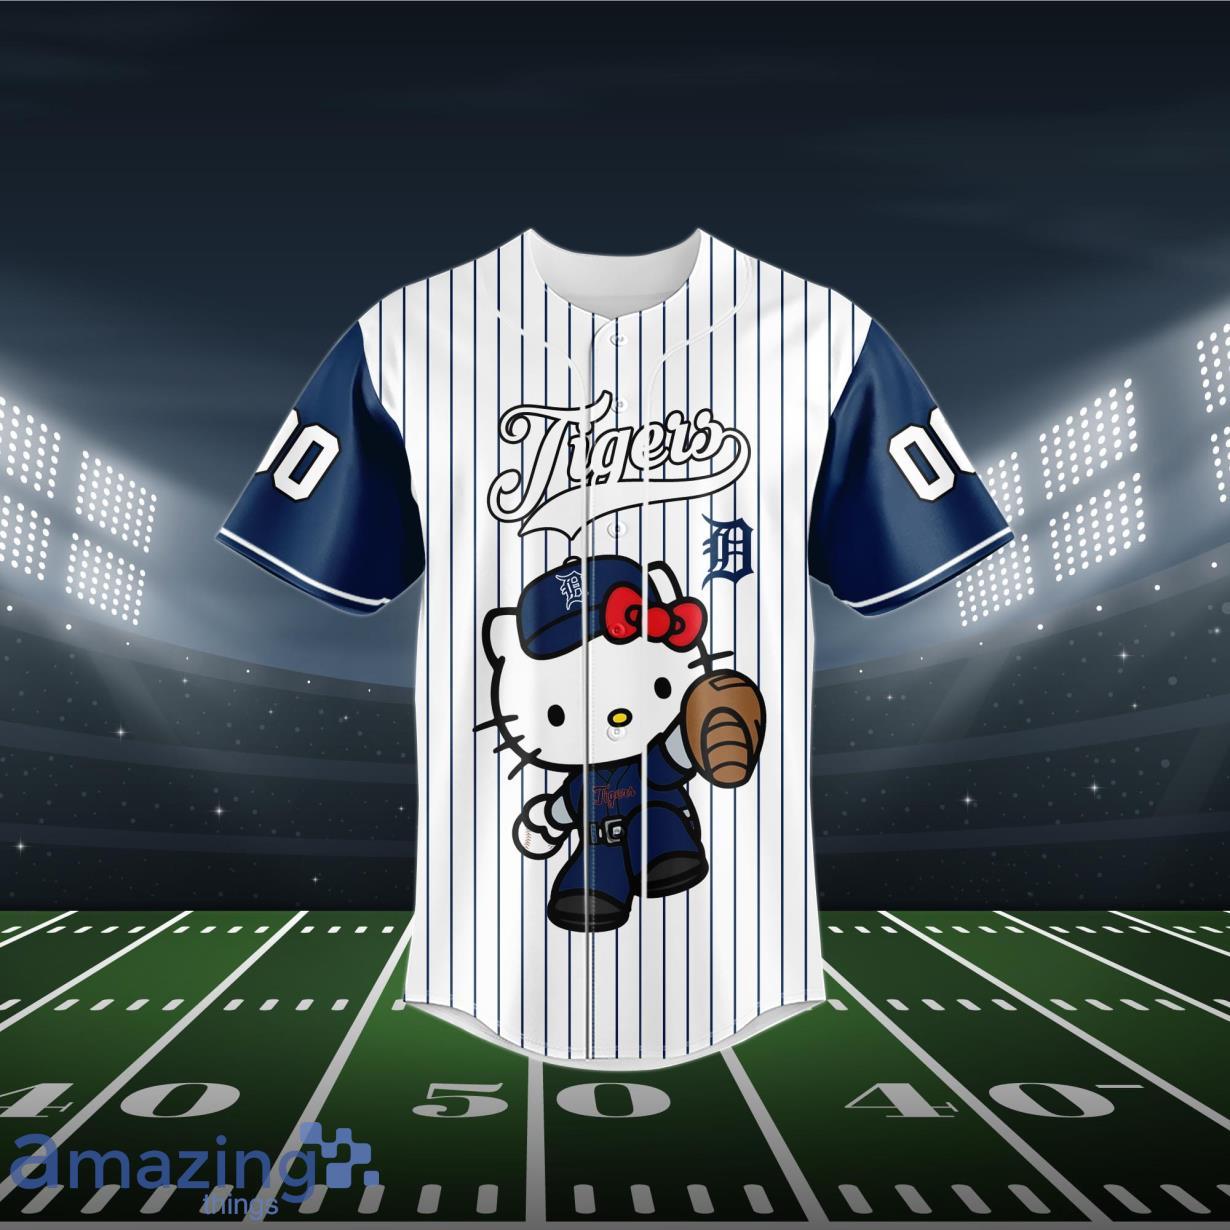 Detroit Tigers Special Hello Kitty Design Baseball Jersey Premium